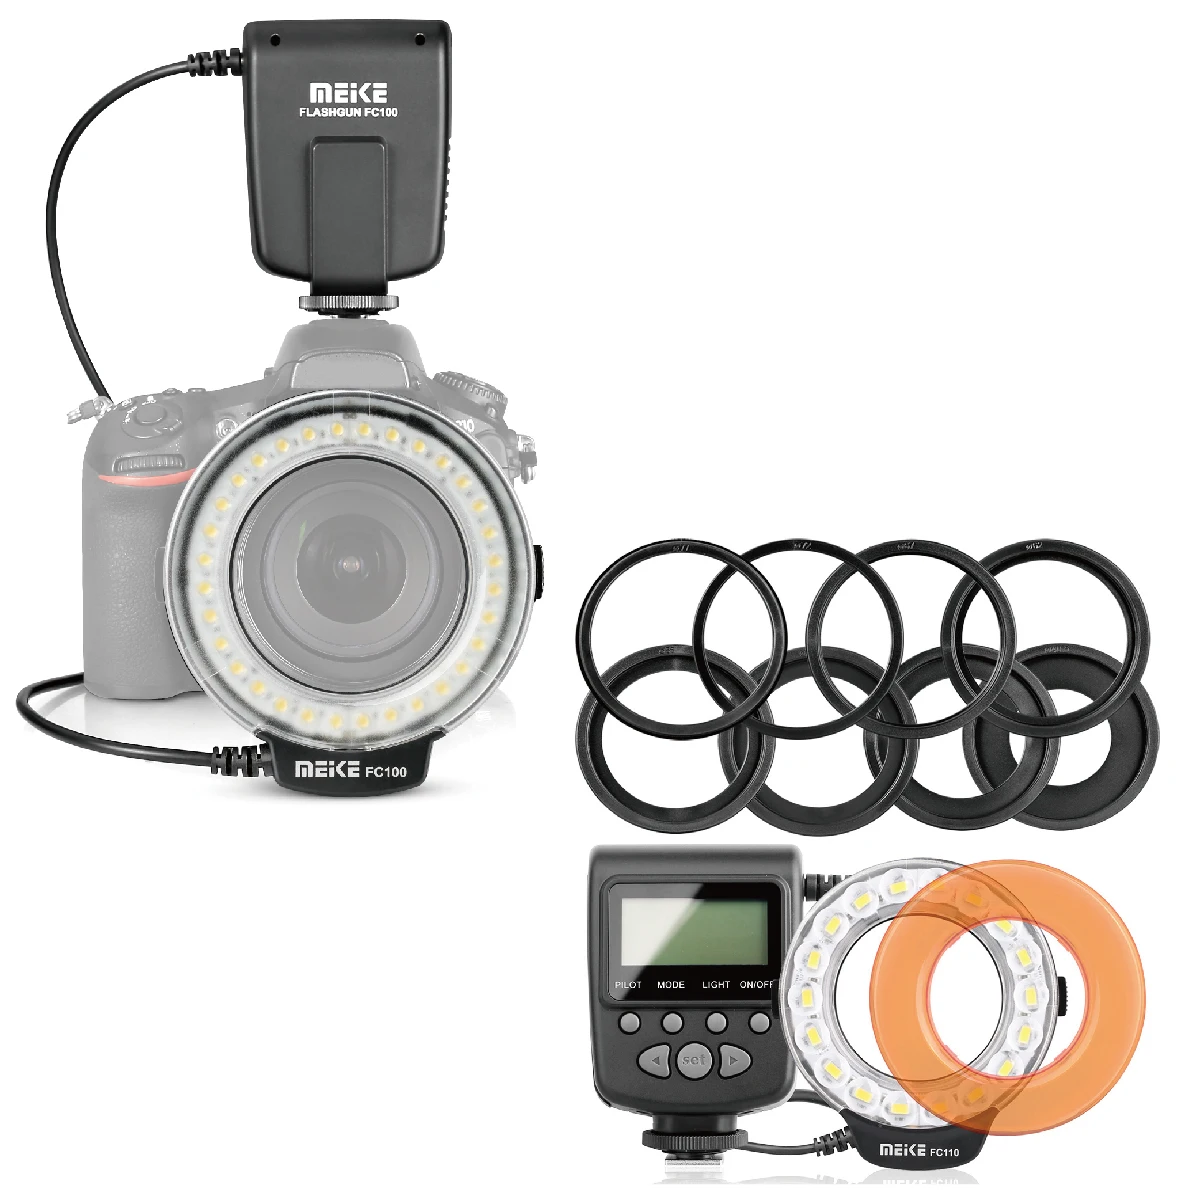 

Meike FC-100 FC100 Manual LED Macro Ring Flash Light With 7 Adapter Ring For Canon Nikon Olympus Pentax Digital DSLR Camer